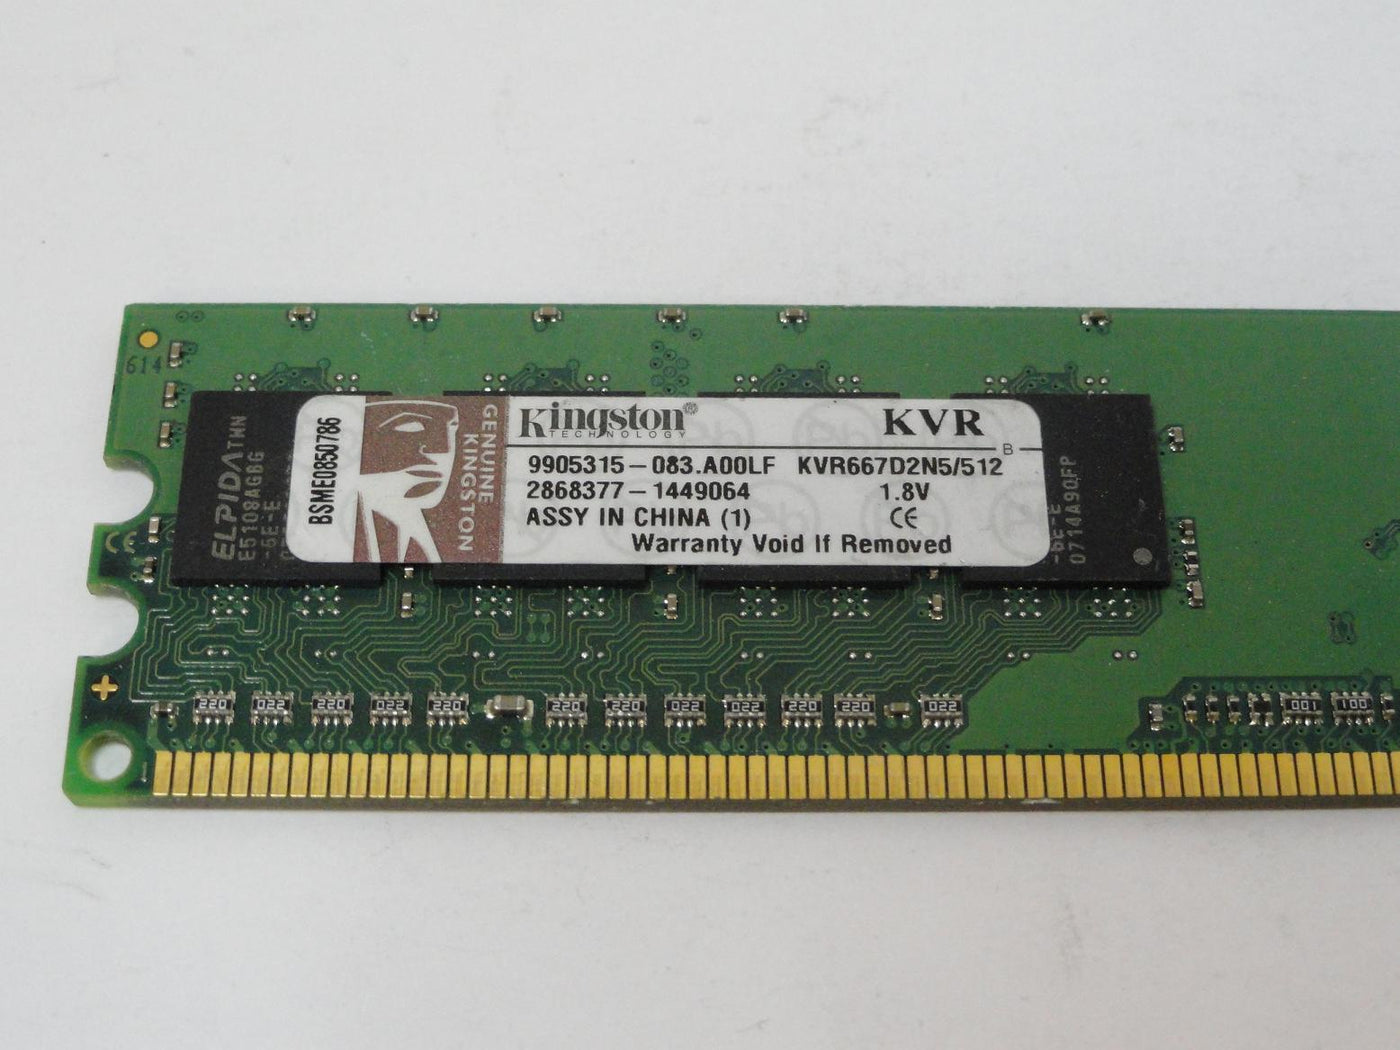 PR25410_9905315-083.A00LF_Kingston 512MB PC2-5300 DDR2-667MHz DIMM RAM - Image3